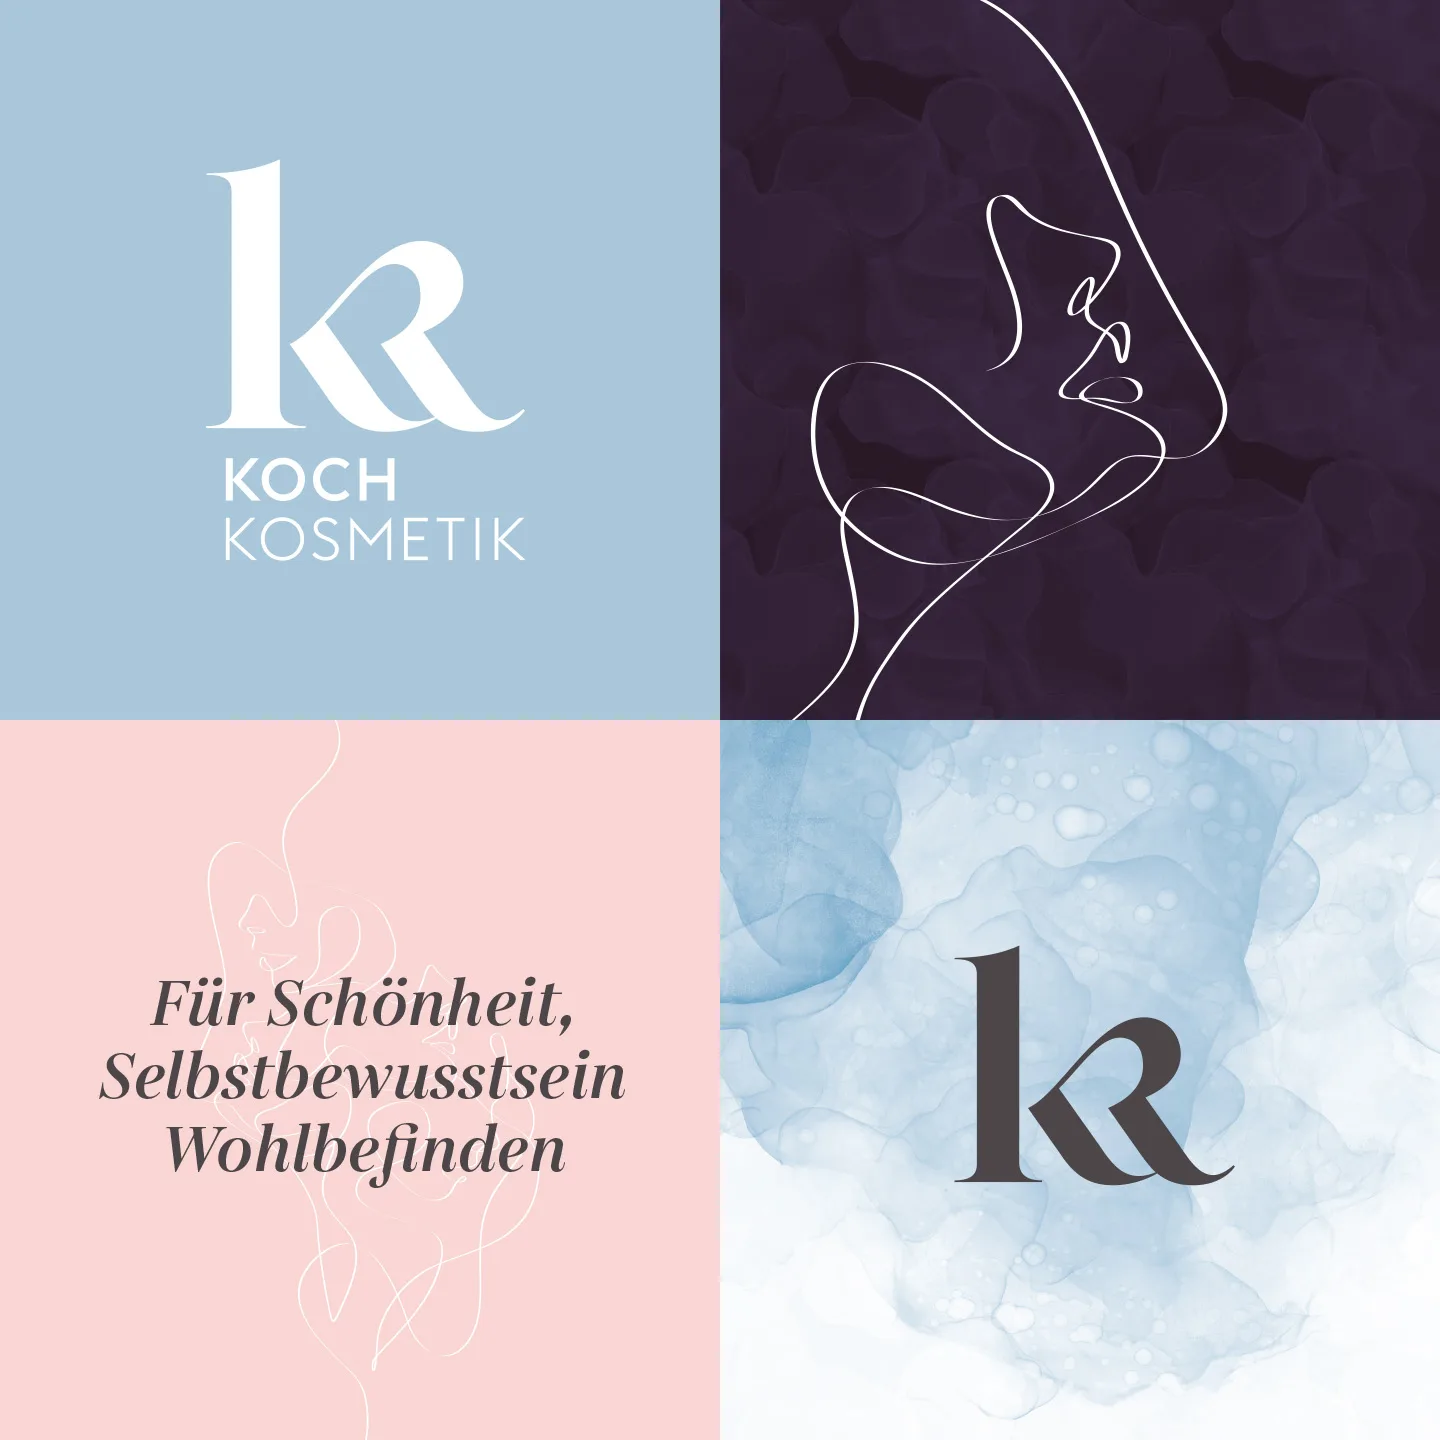 Corporate design elements for Koch Kosmetik